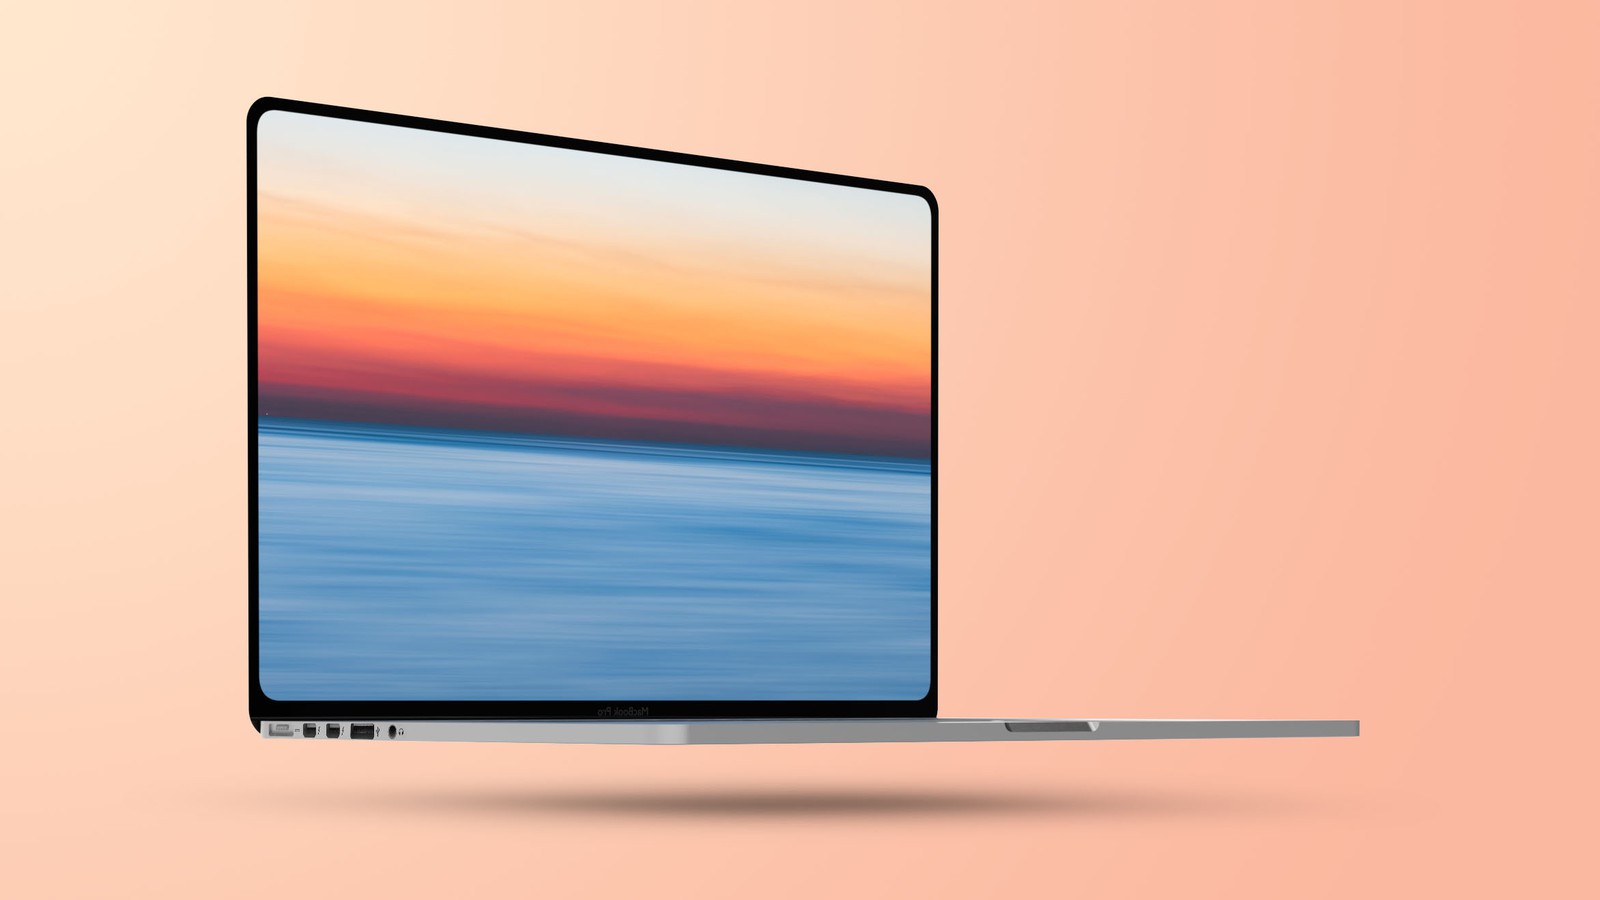 Thiết kế của MacBook Pro 2021 